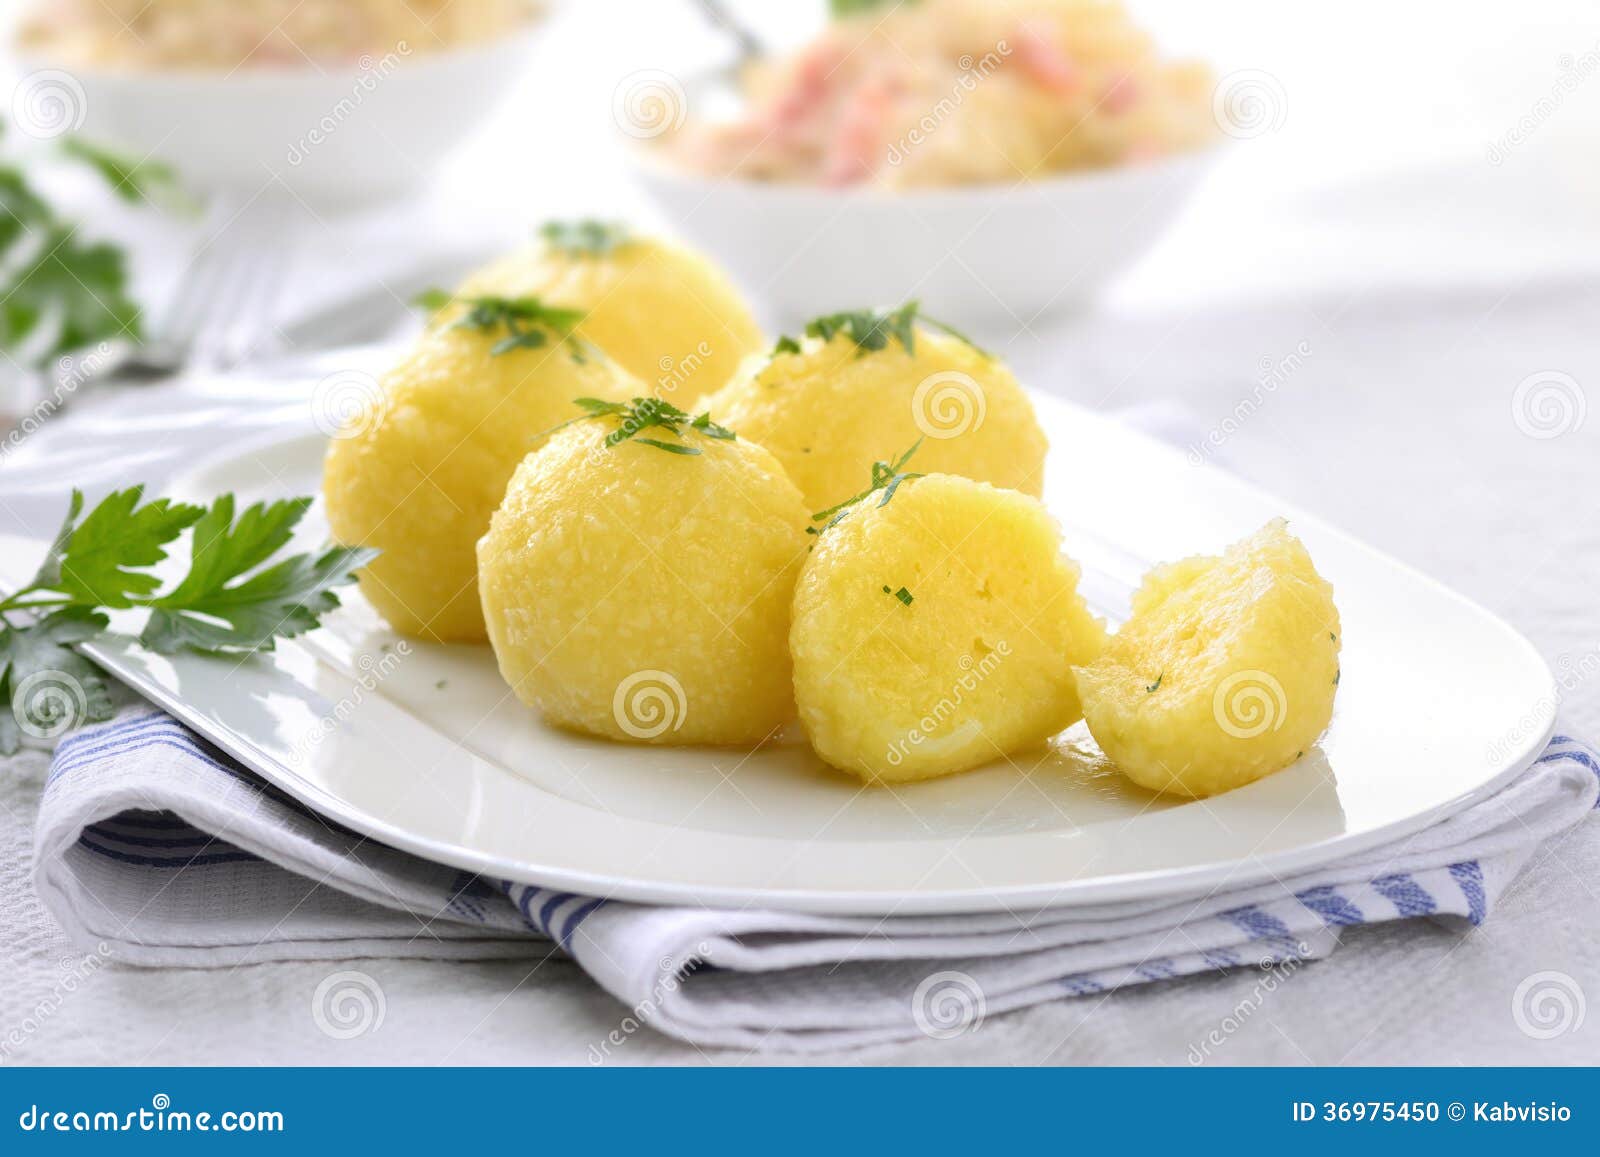 potato dumplings